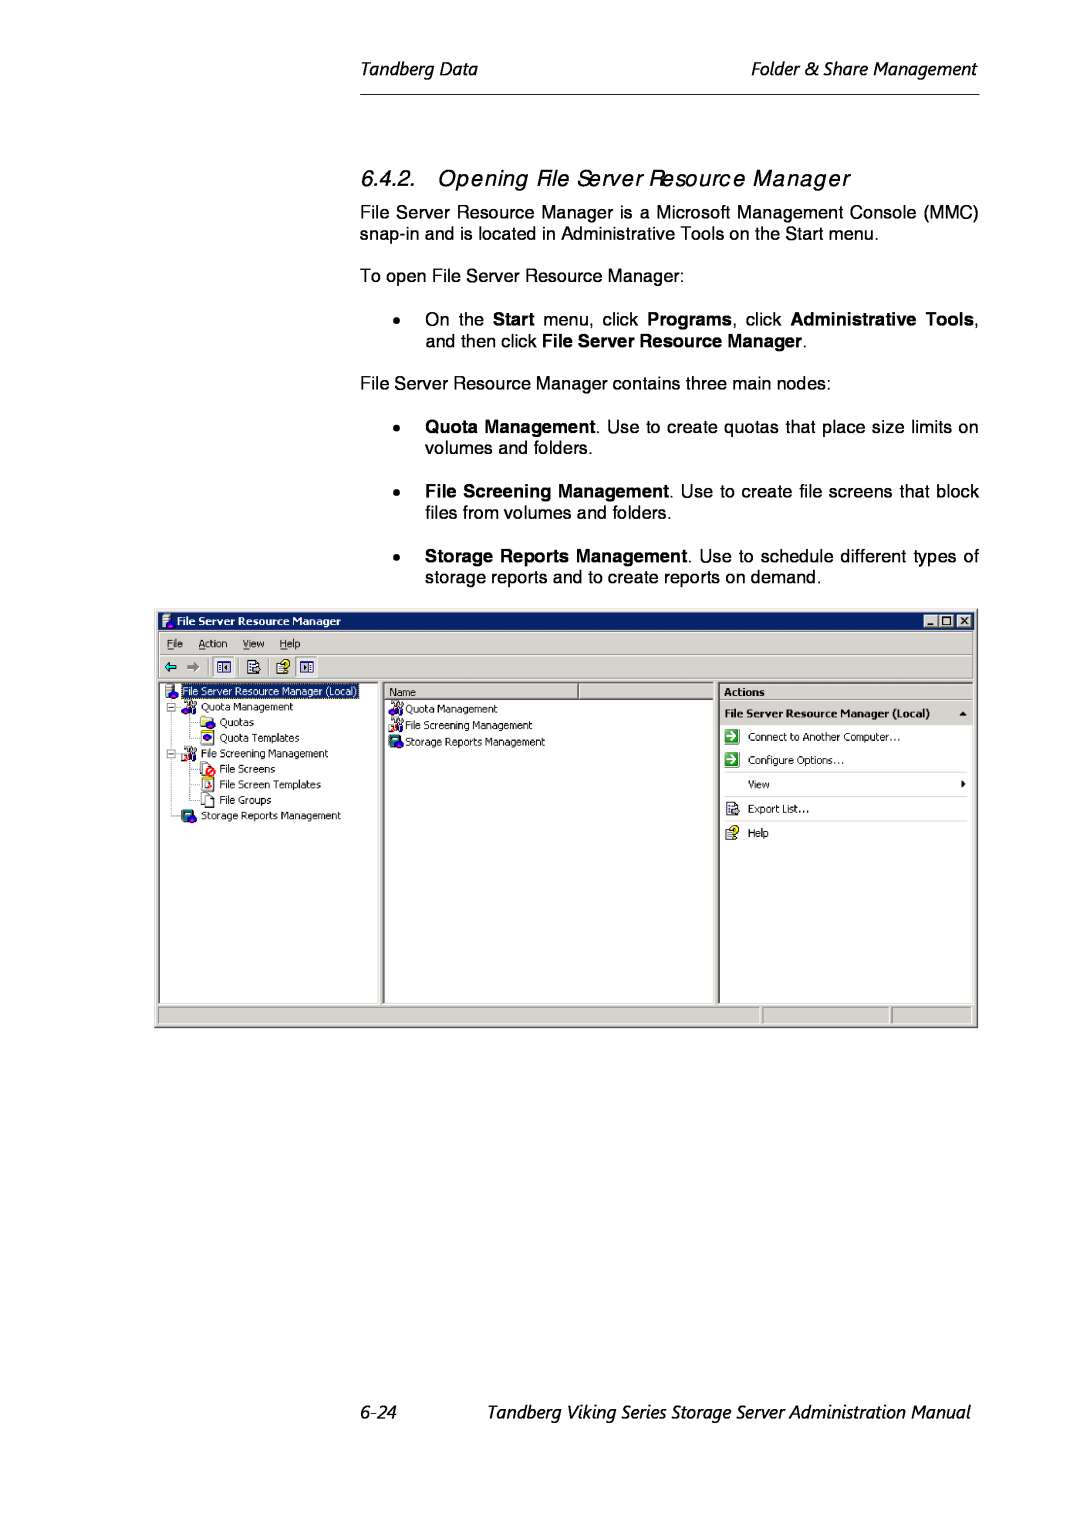 Tandberg Data Viking FS-1500 manual Opening File Server Resource Manager, Tandberg DataFolder & Share Management, 6-24 